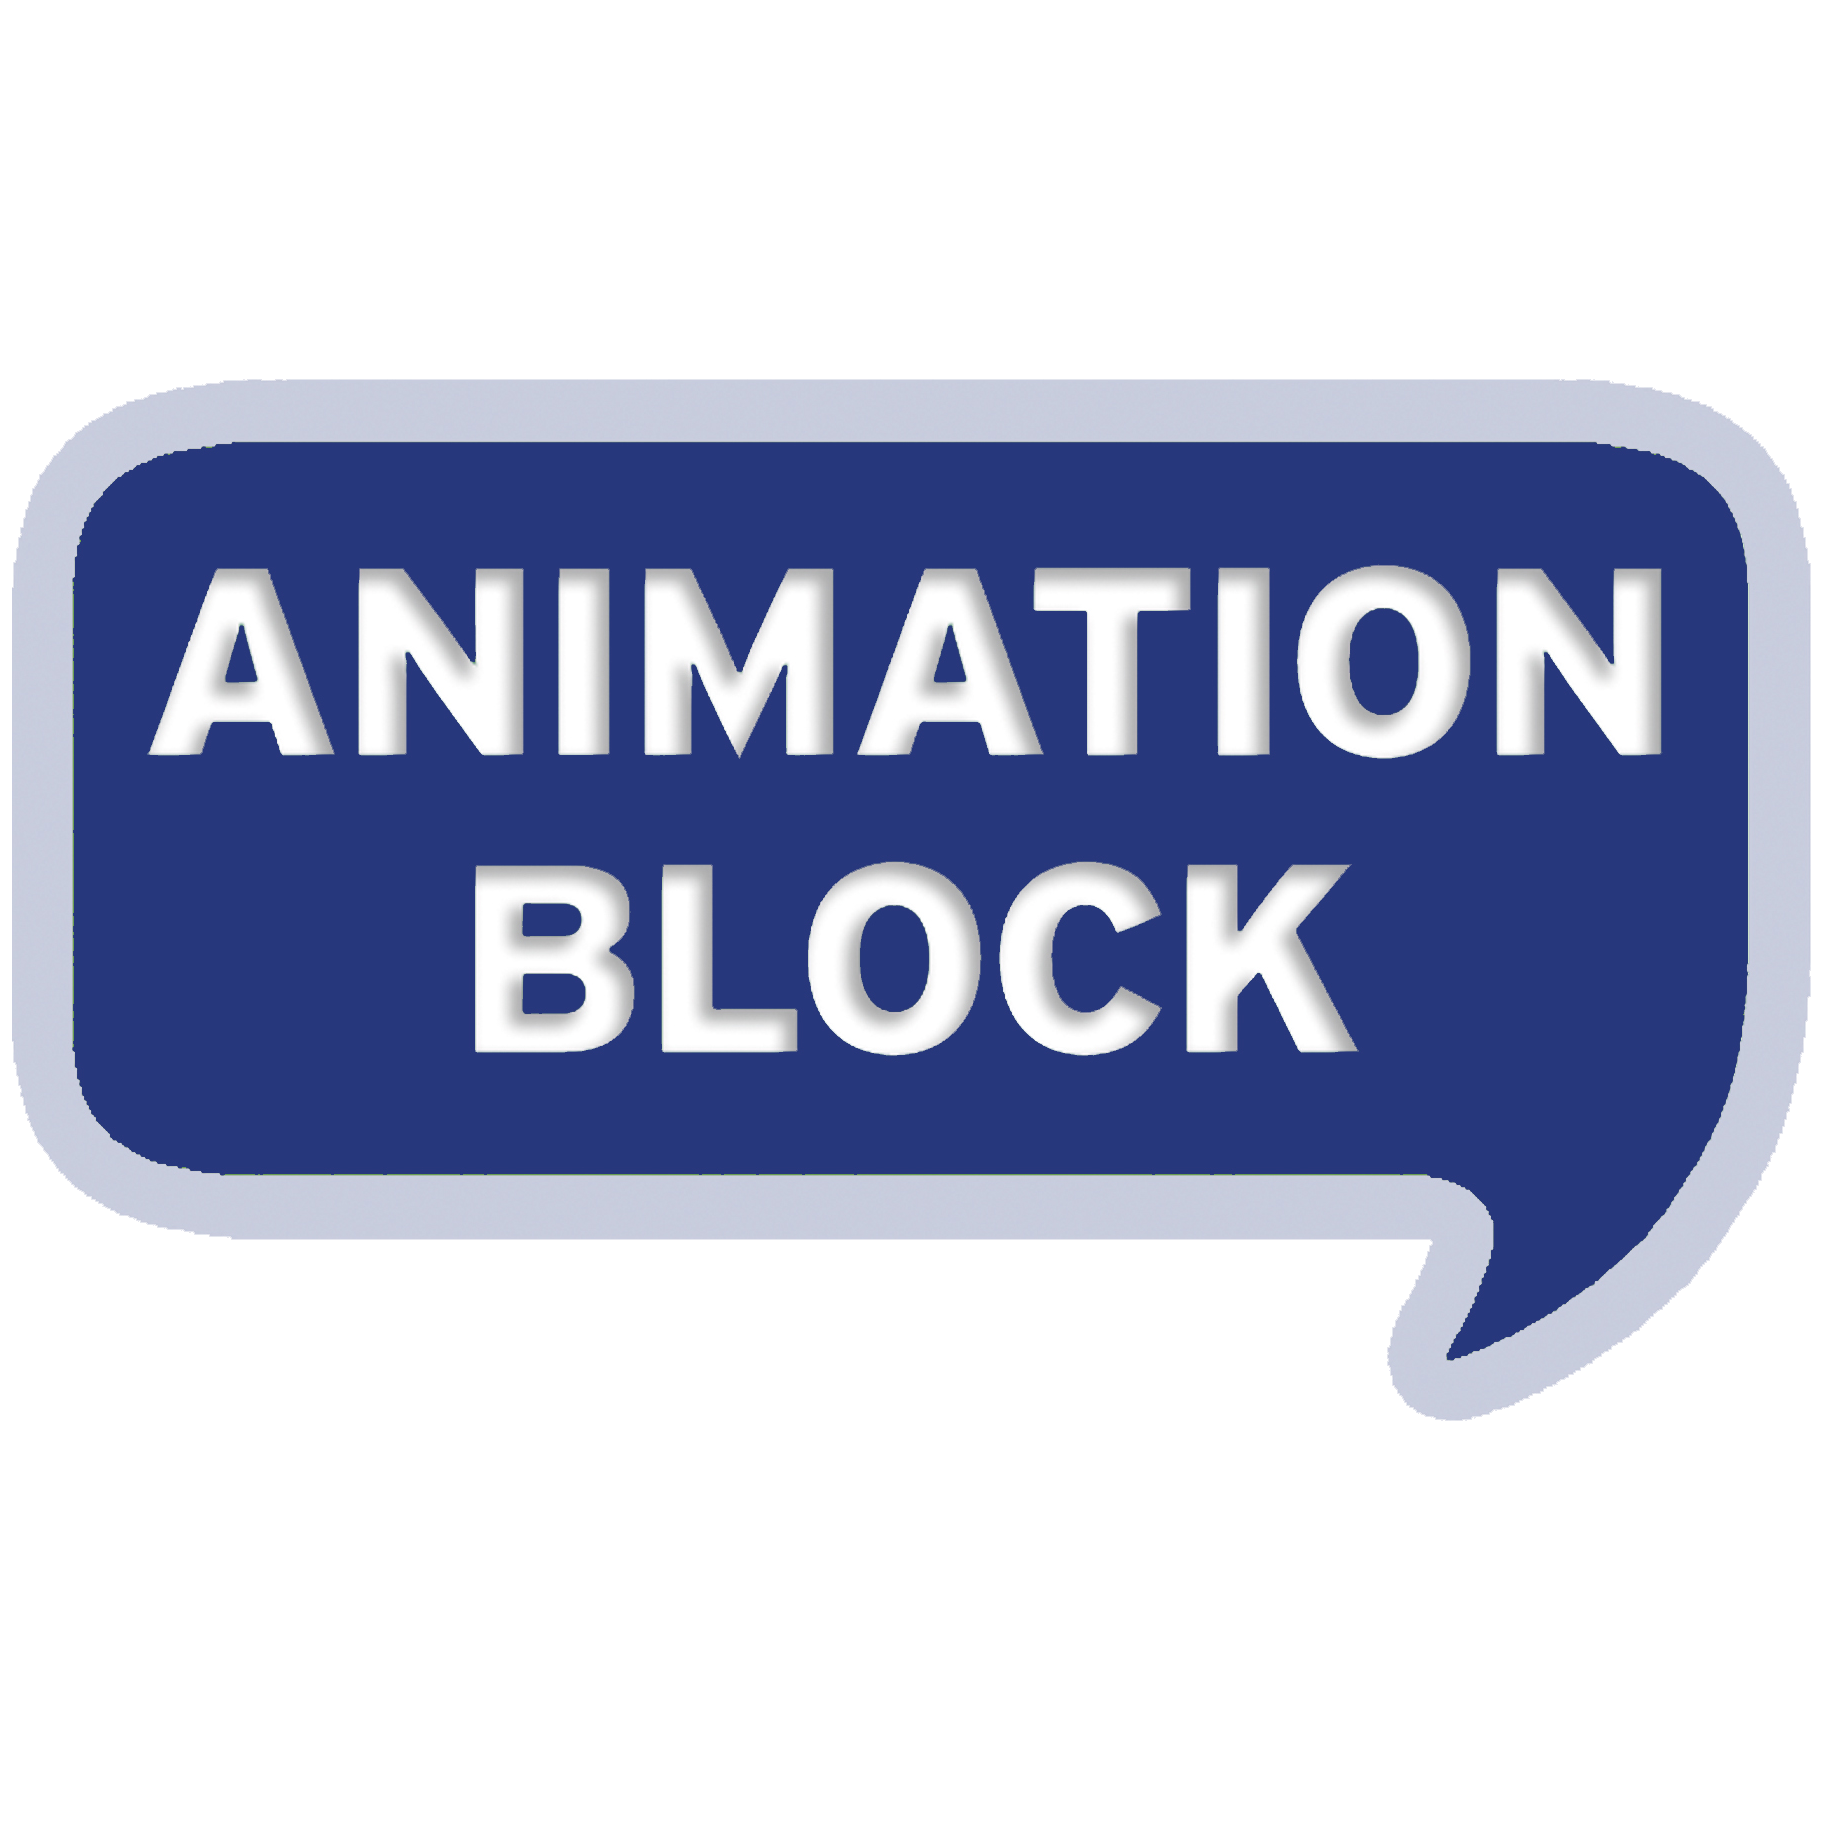 Animation Block